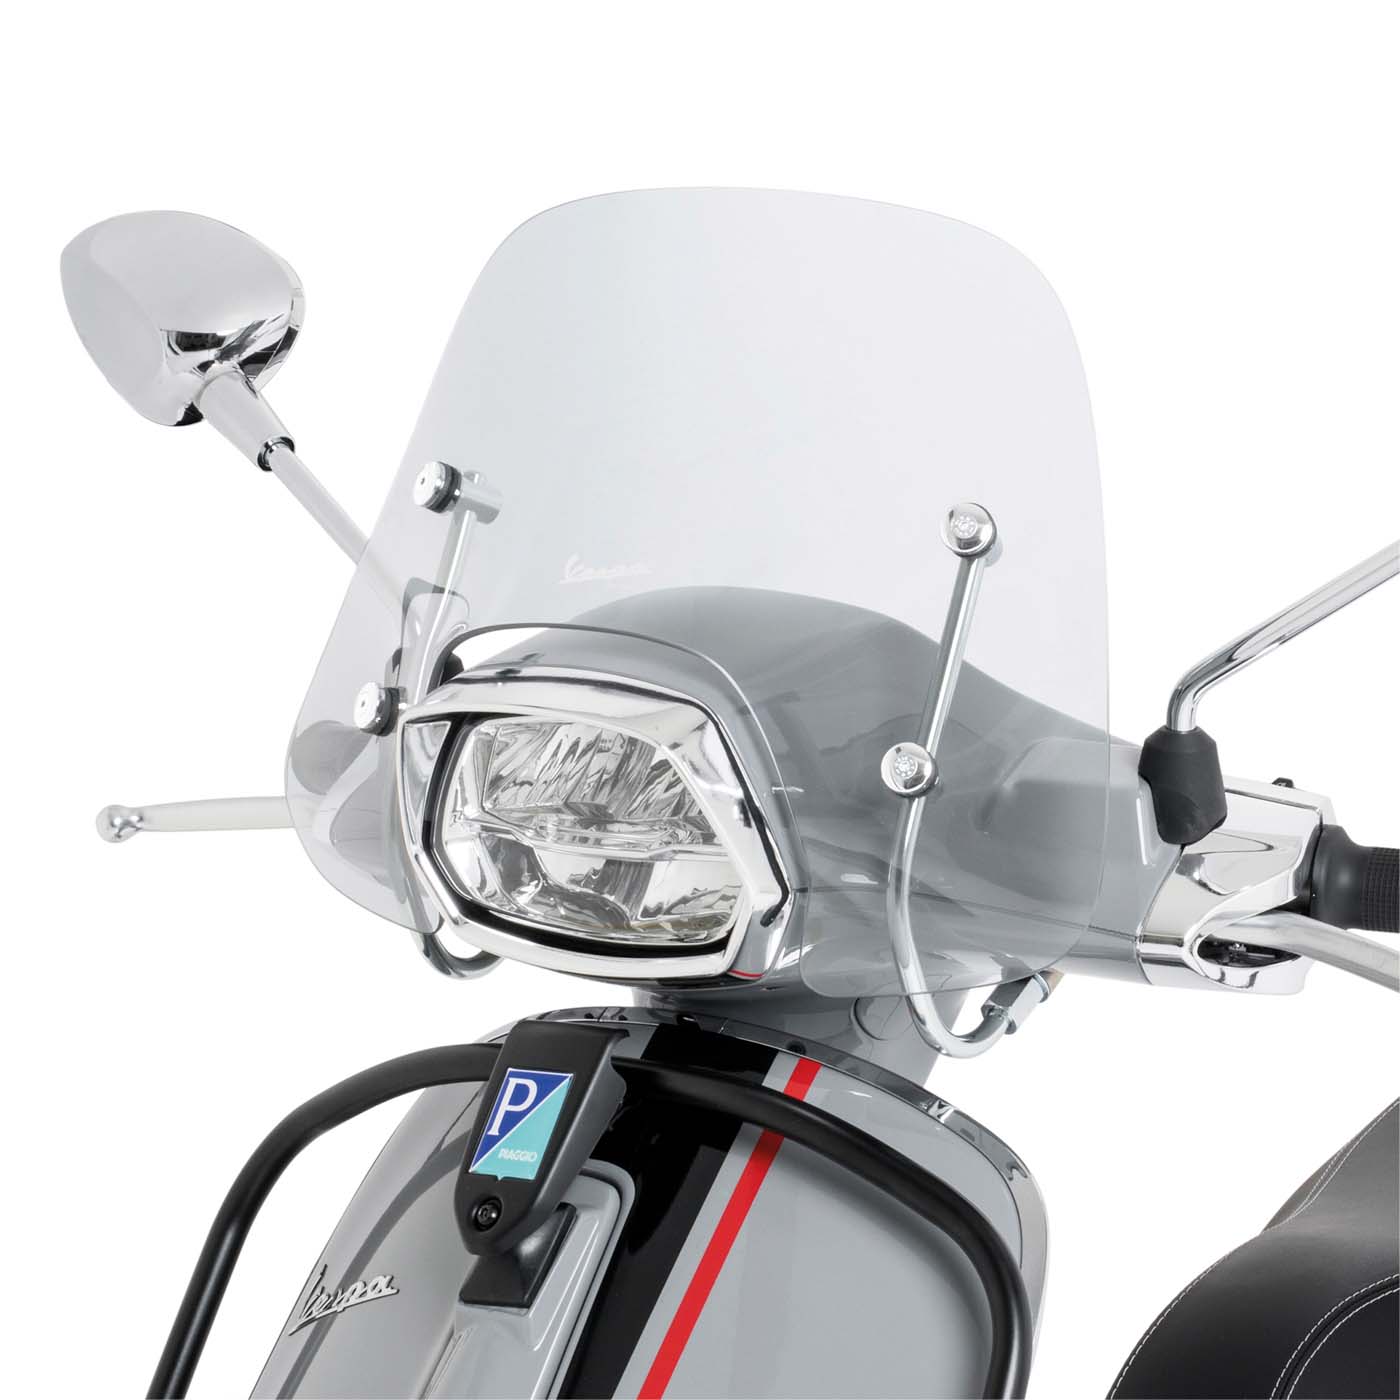 Vespa Sprint Primavera 150 2013 2020 Motorcycle Accessories - Temu Belgium